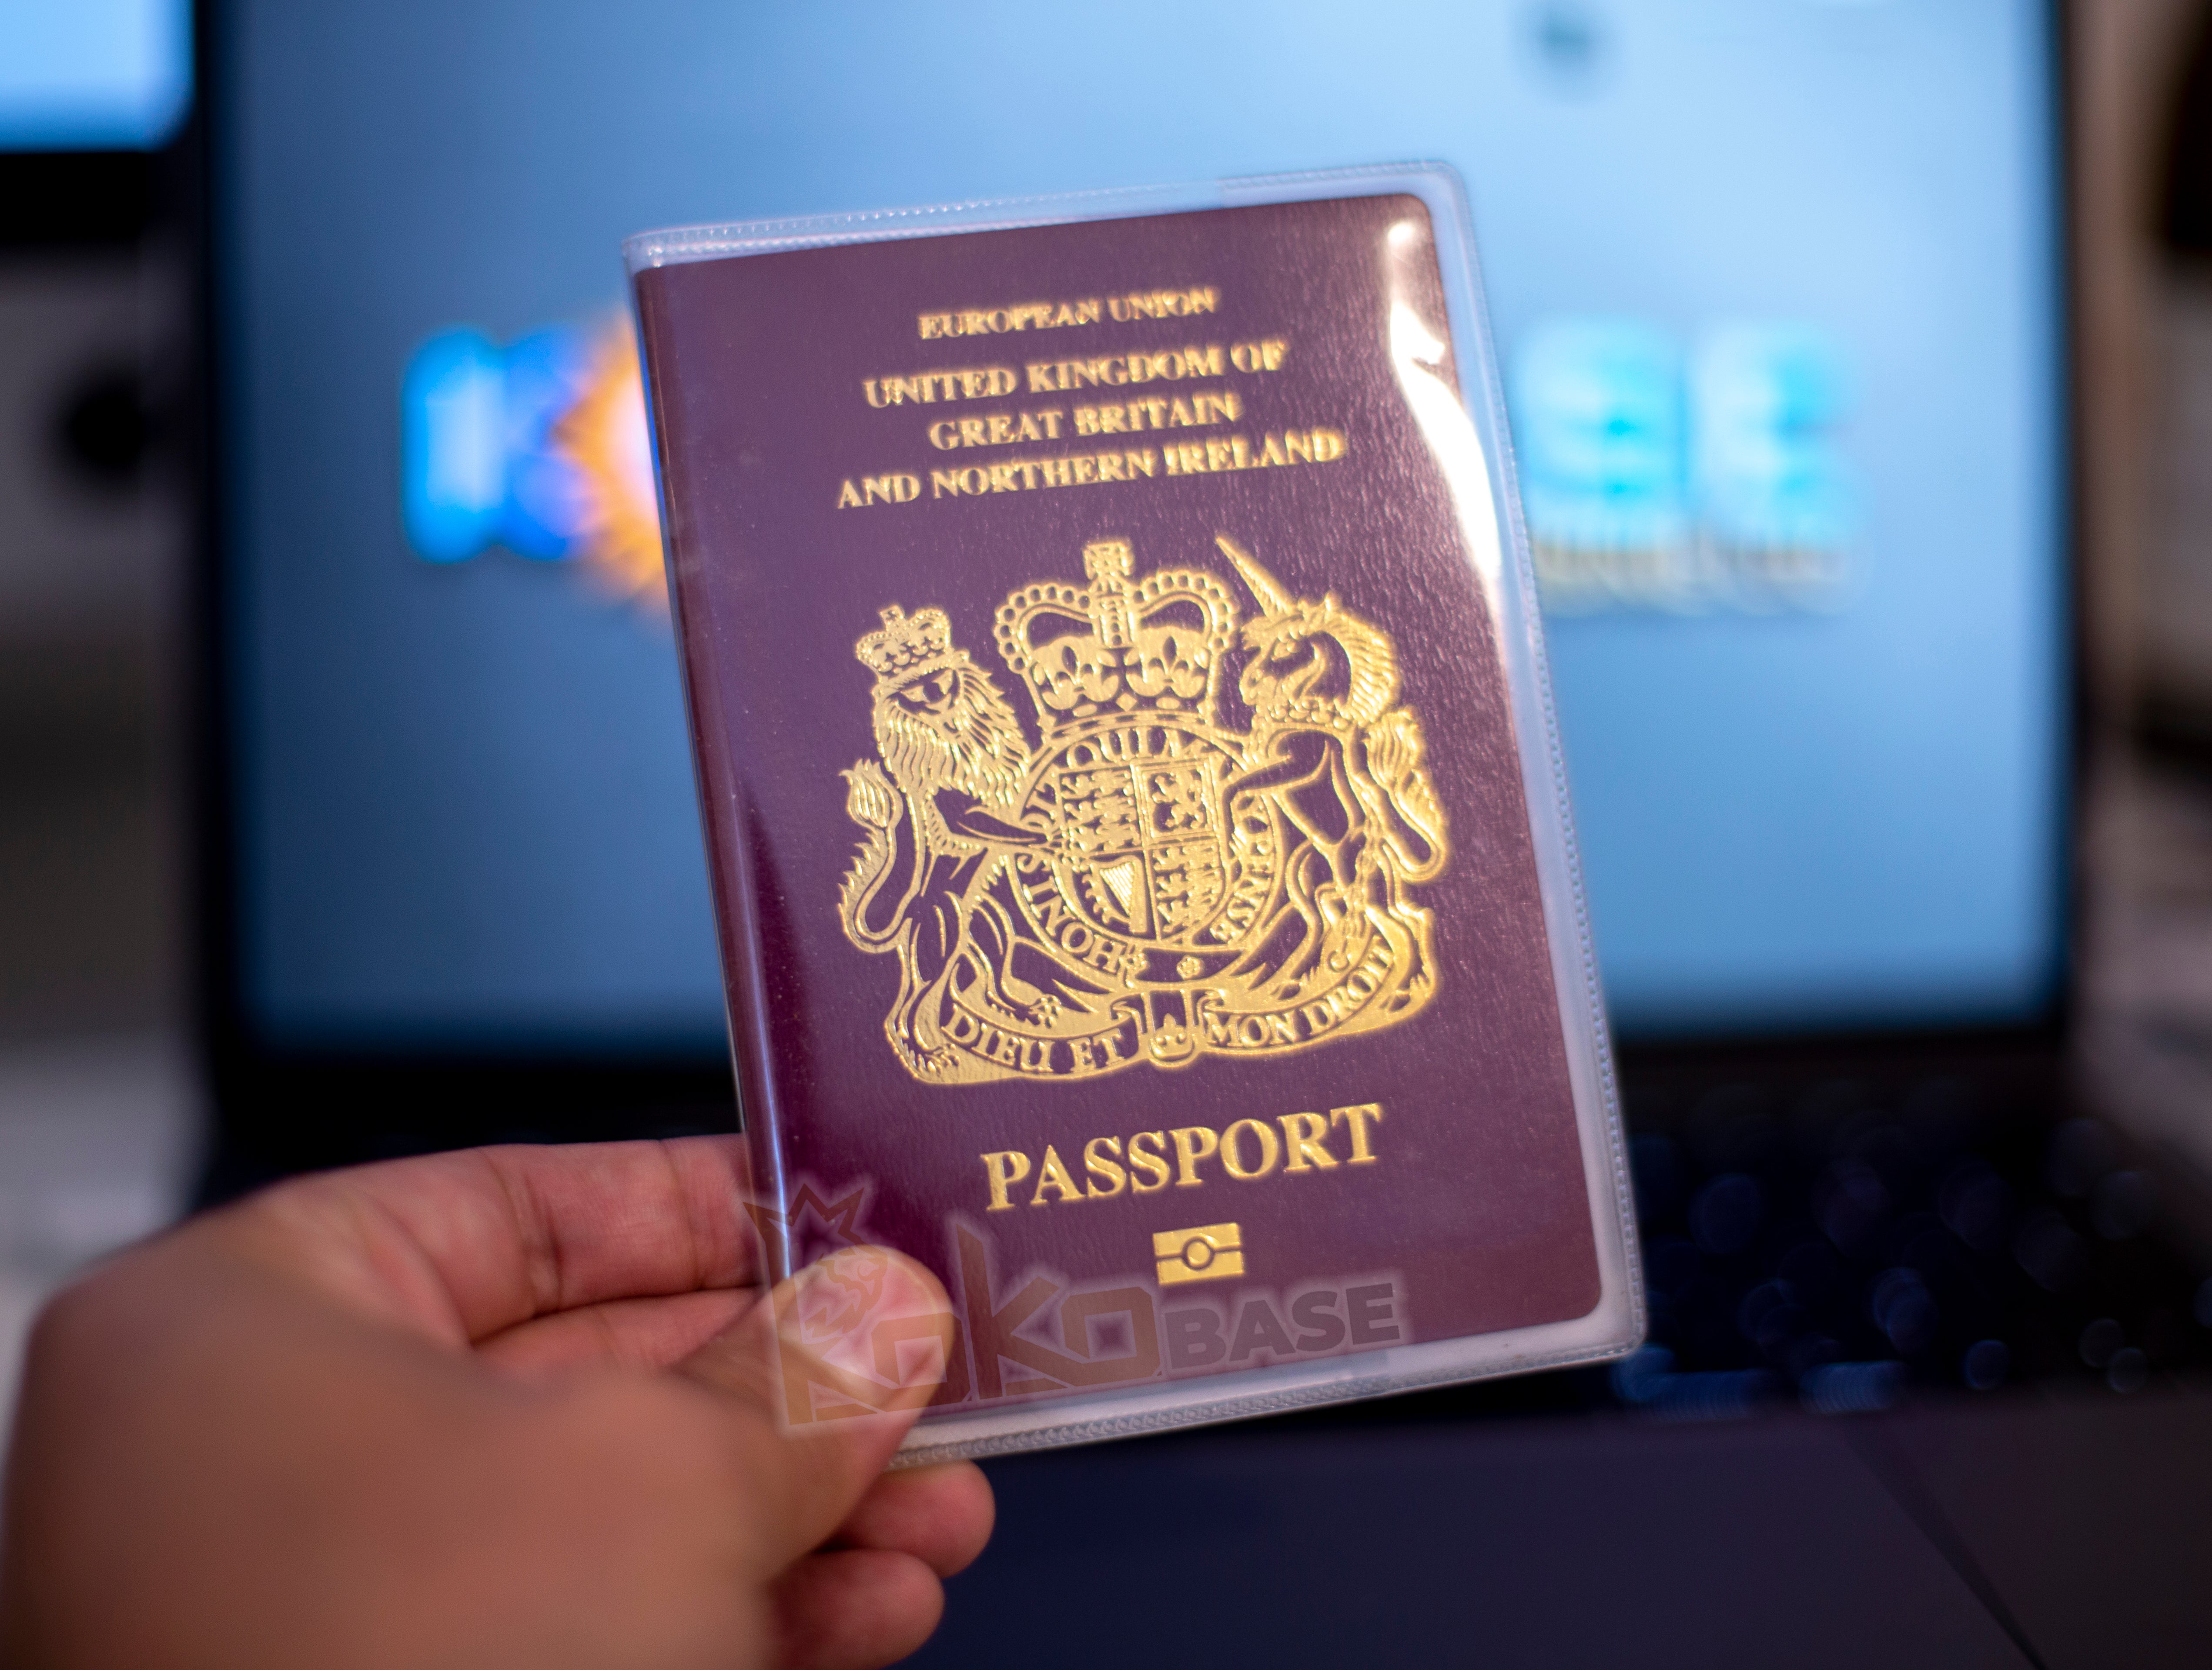 2PCS Premium Transparent Travel Passport Holder - Durable PVC, ID and Card Slots, Waterproof - Essential Travel Accessory